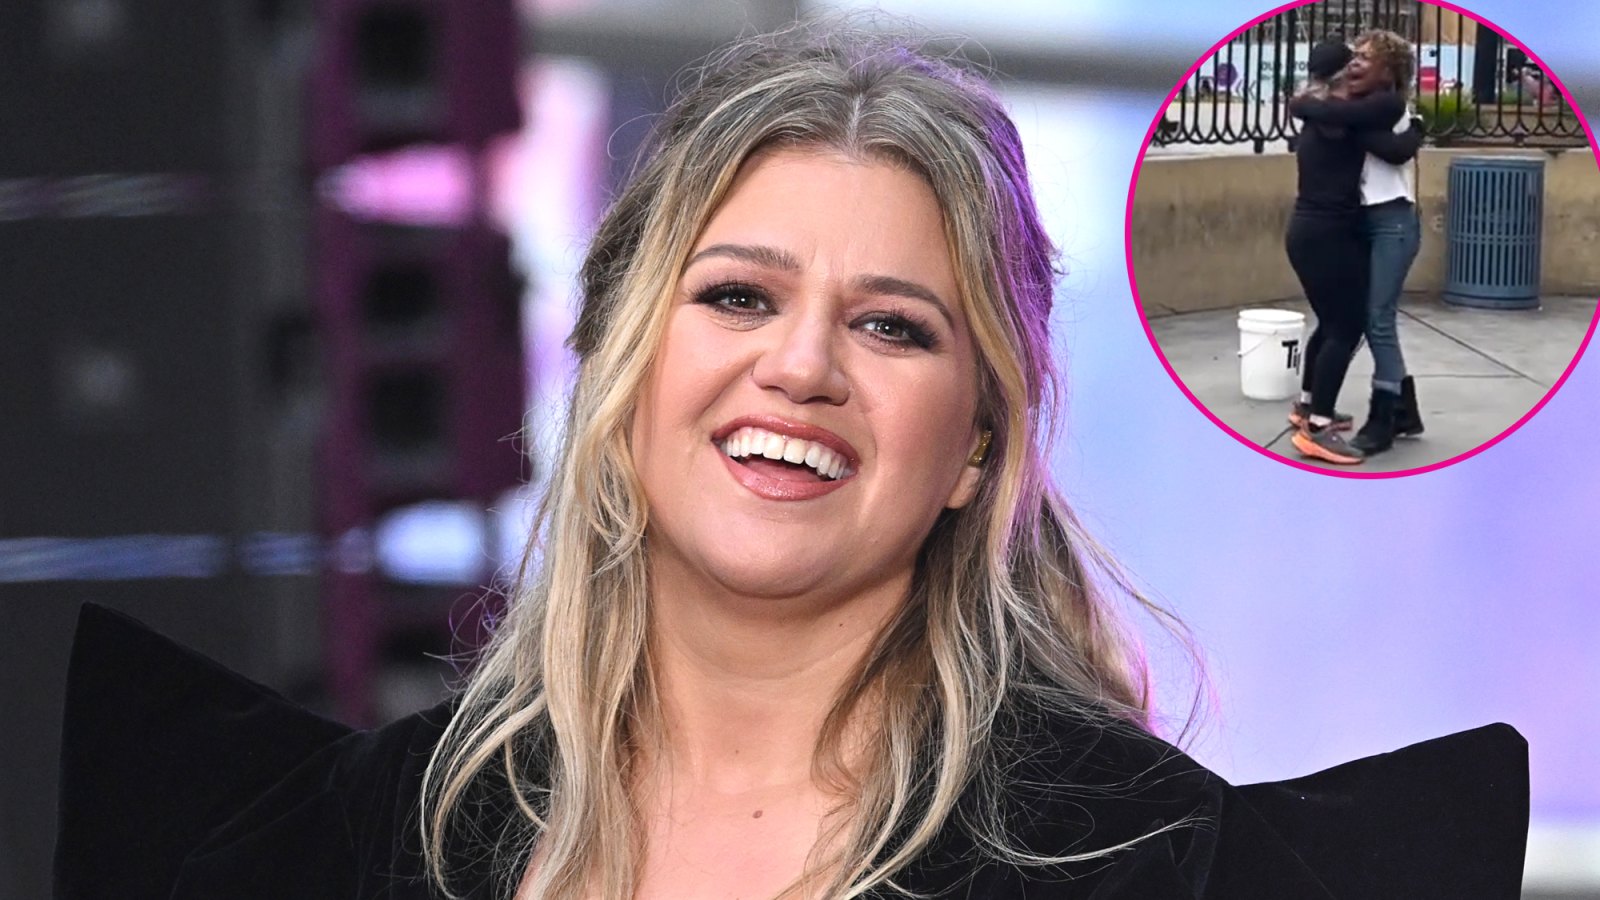 Kelly Clarkson Surprises Street Musician in Vegas, Joins Her in Singing on Street